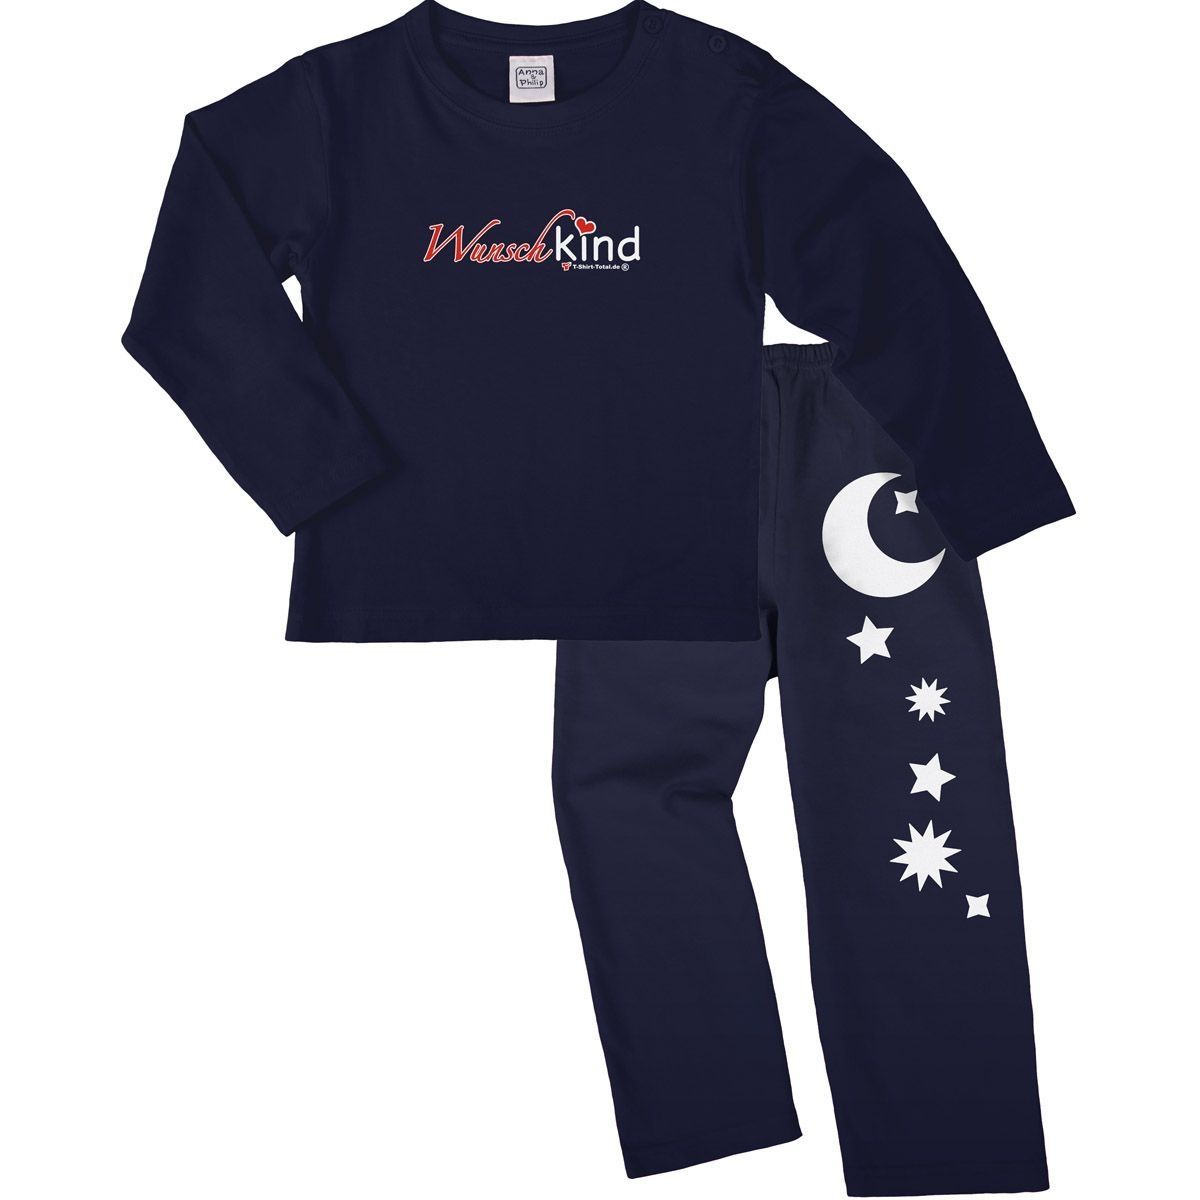 Wunschkind Pyjama Set navy / navy 80 / 86